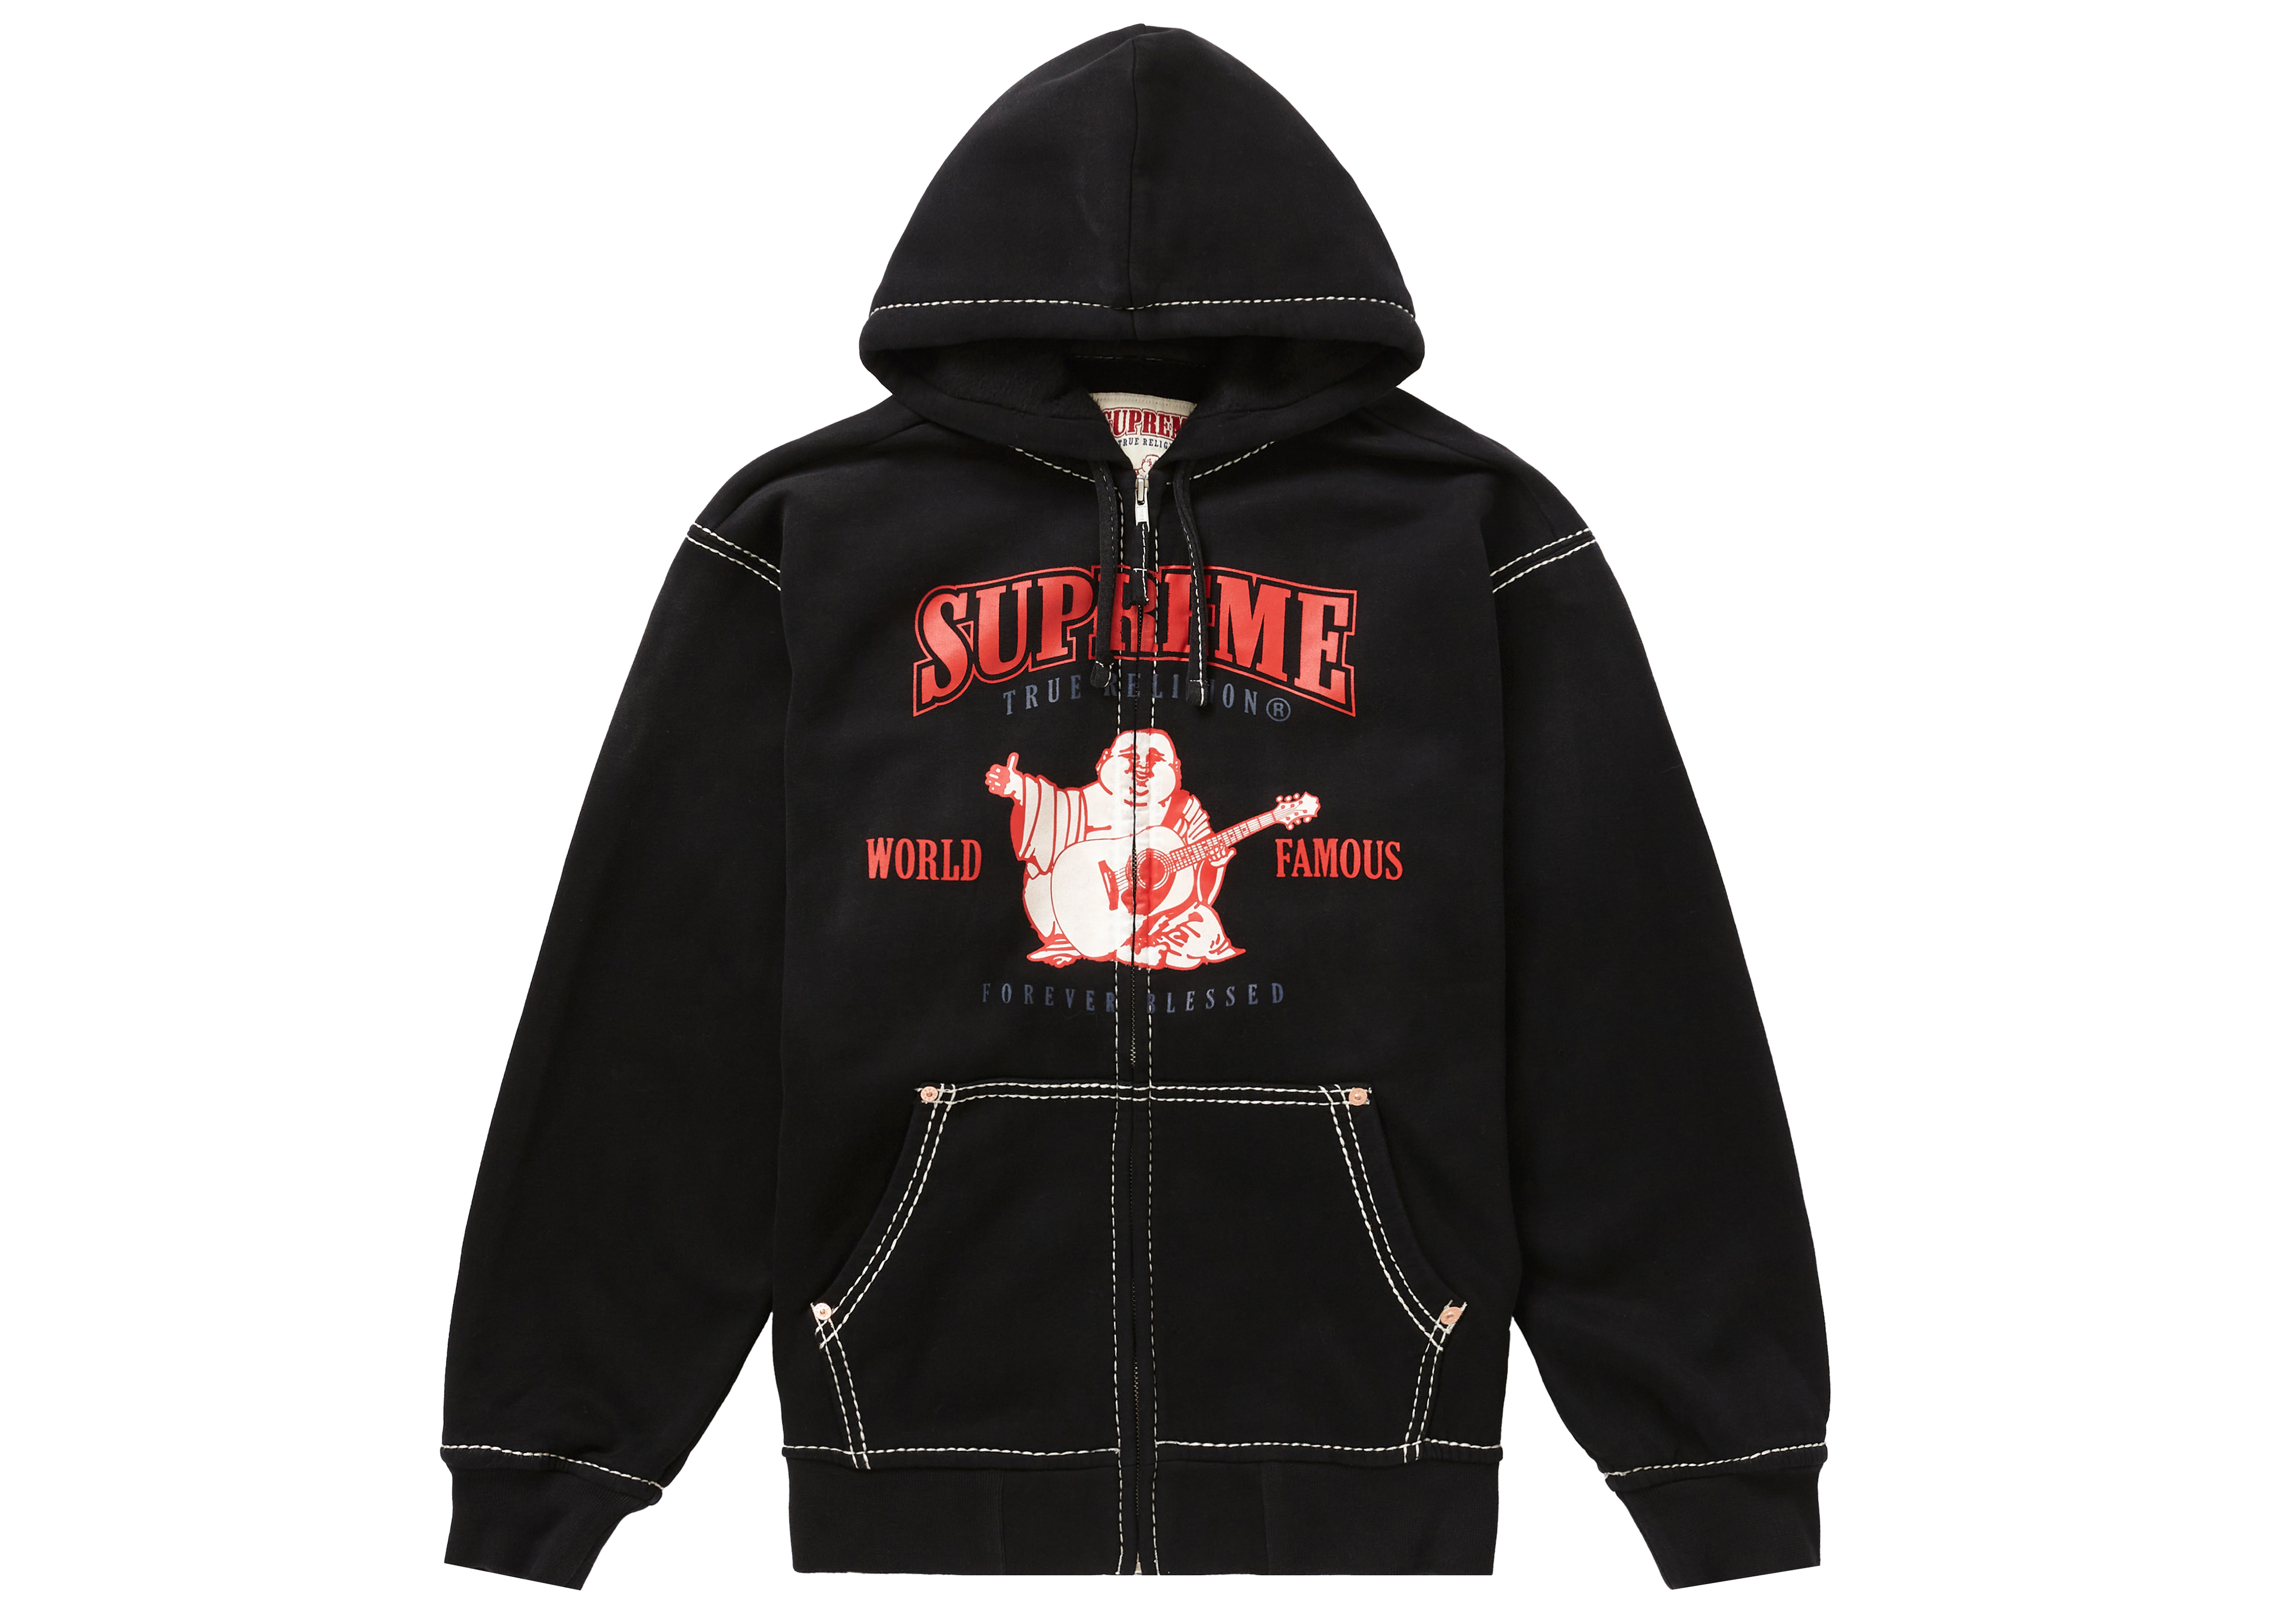 Supreme True Religion Zip Up Hooded Sweatshirt Black - FW21 - US